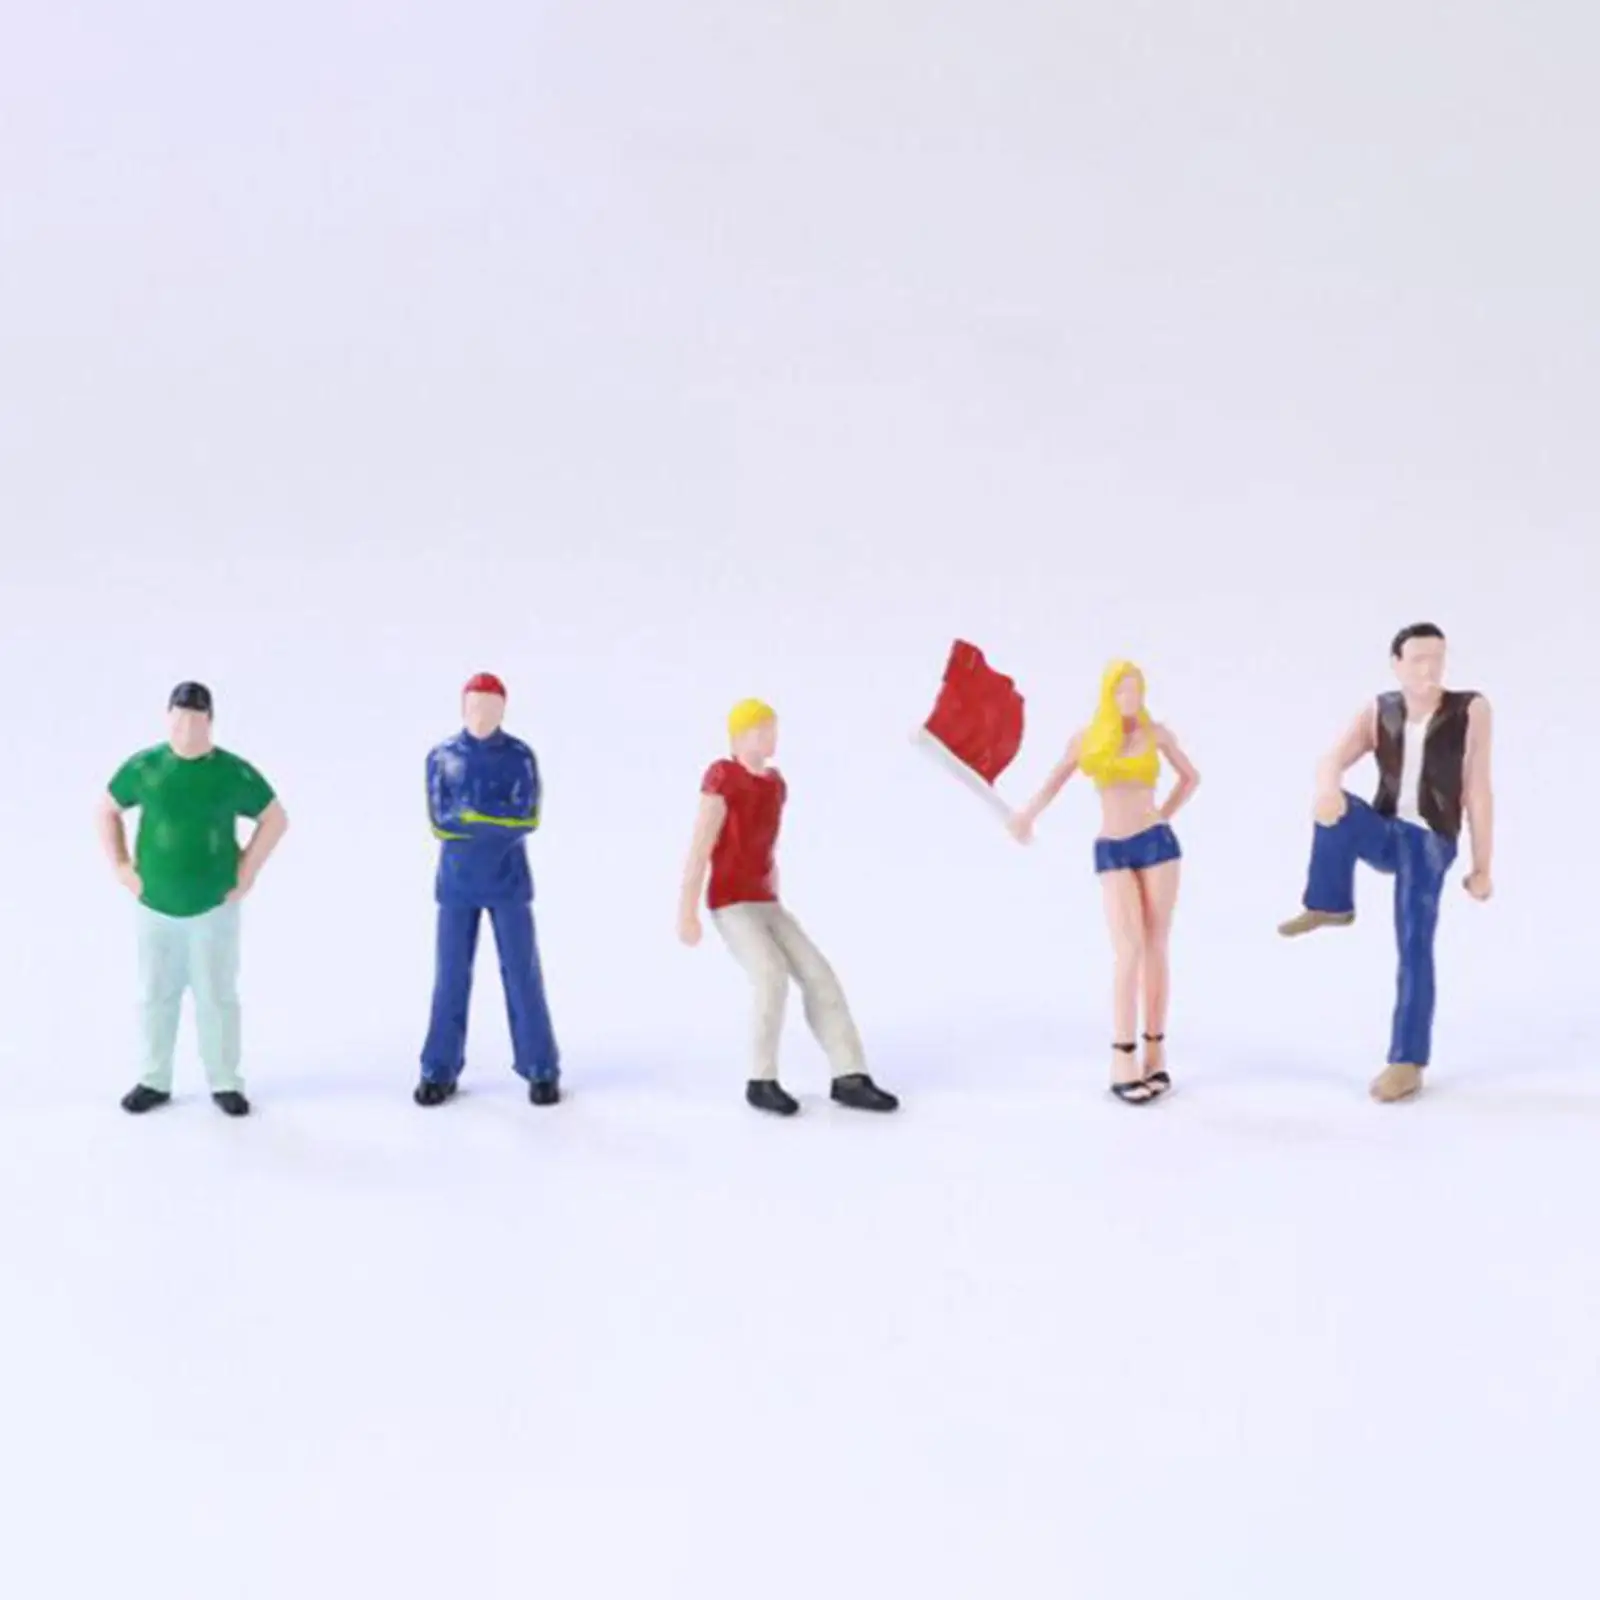 5x 1/64 Scale People Figure Set small people Figures for Miniature Scene